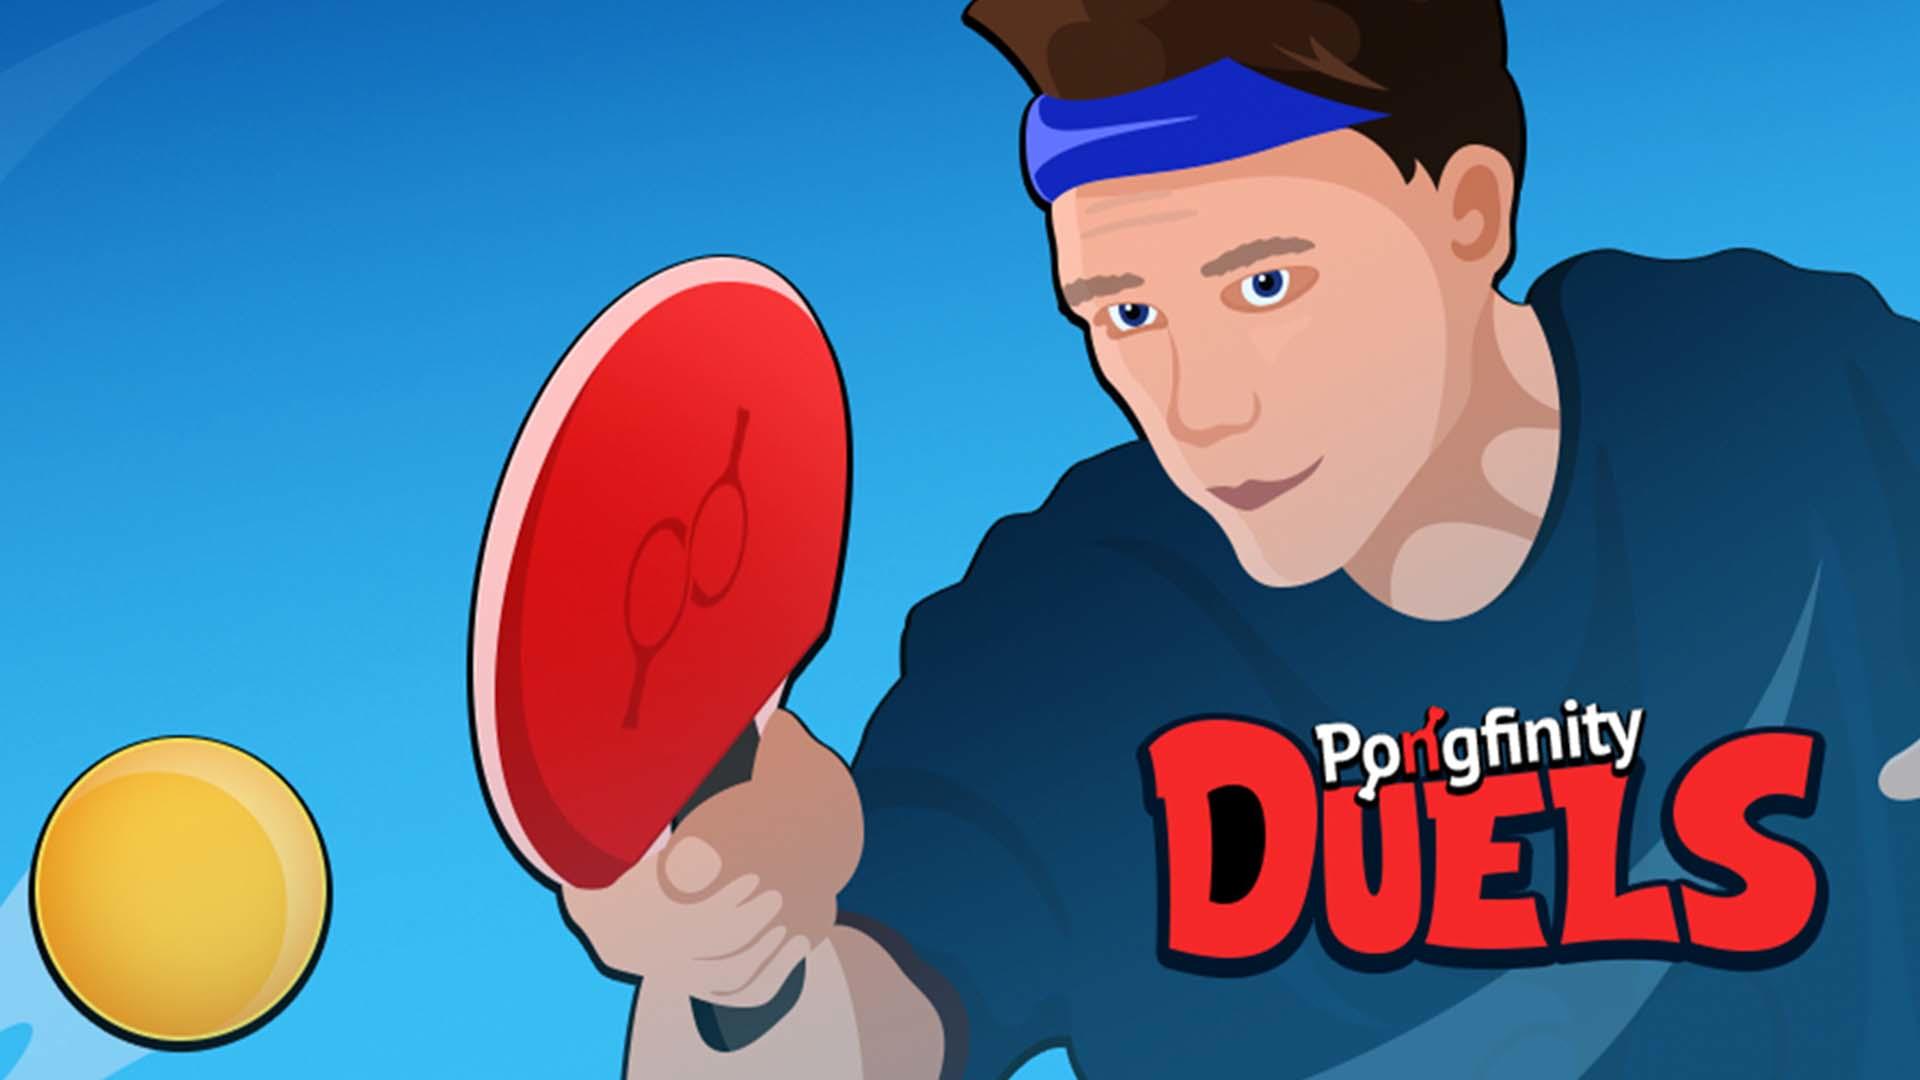 Banner of Pongfinity Duels: 1v1 Online 